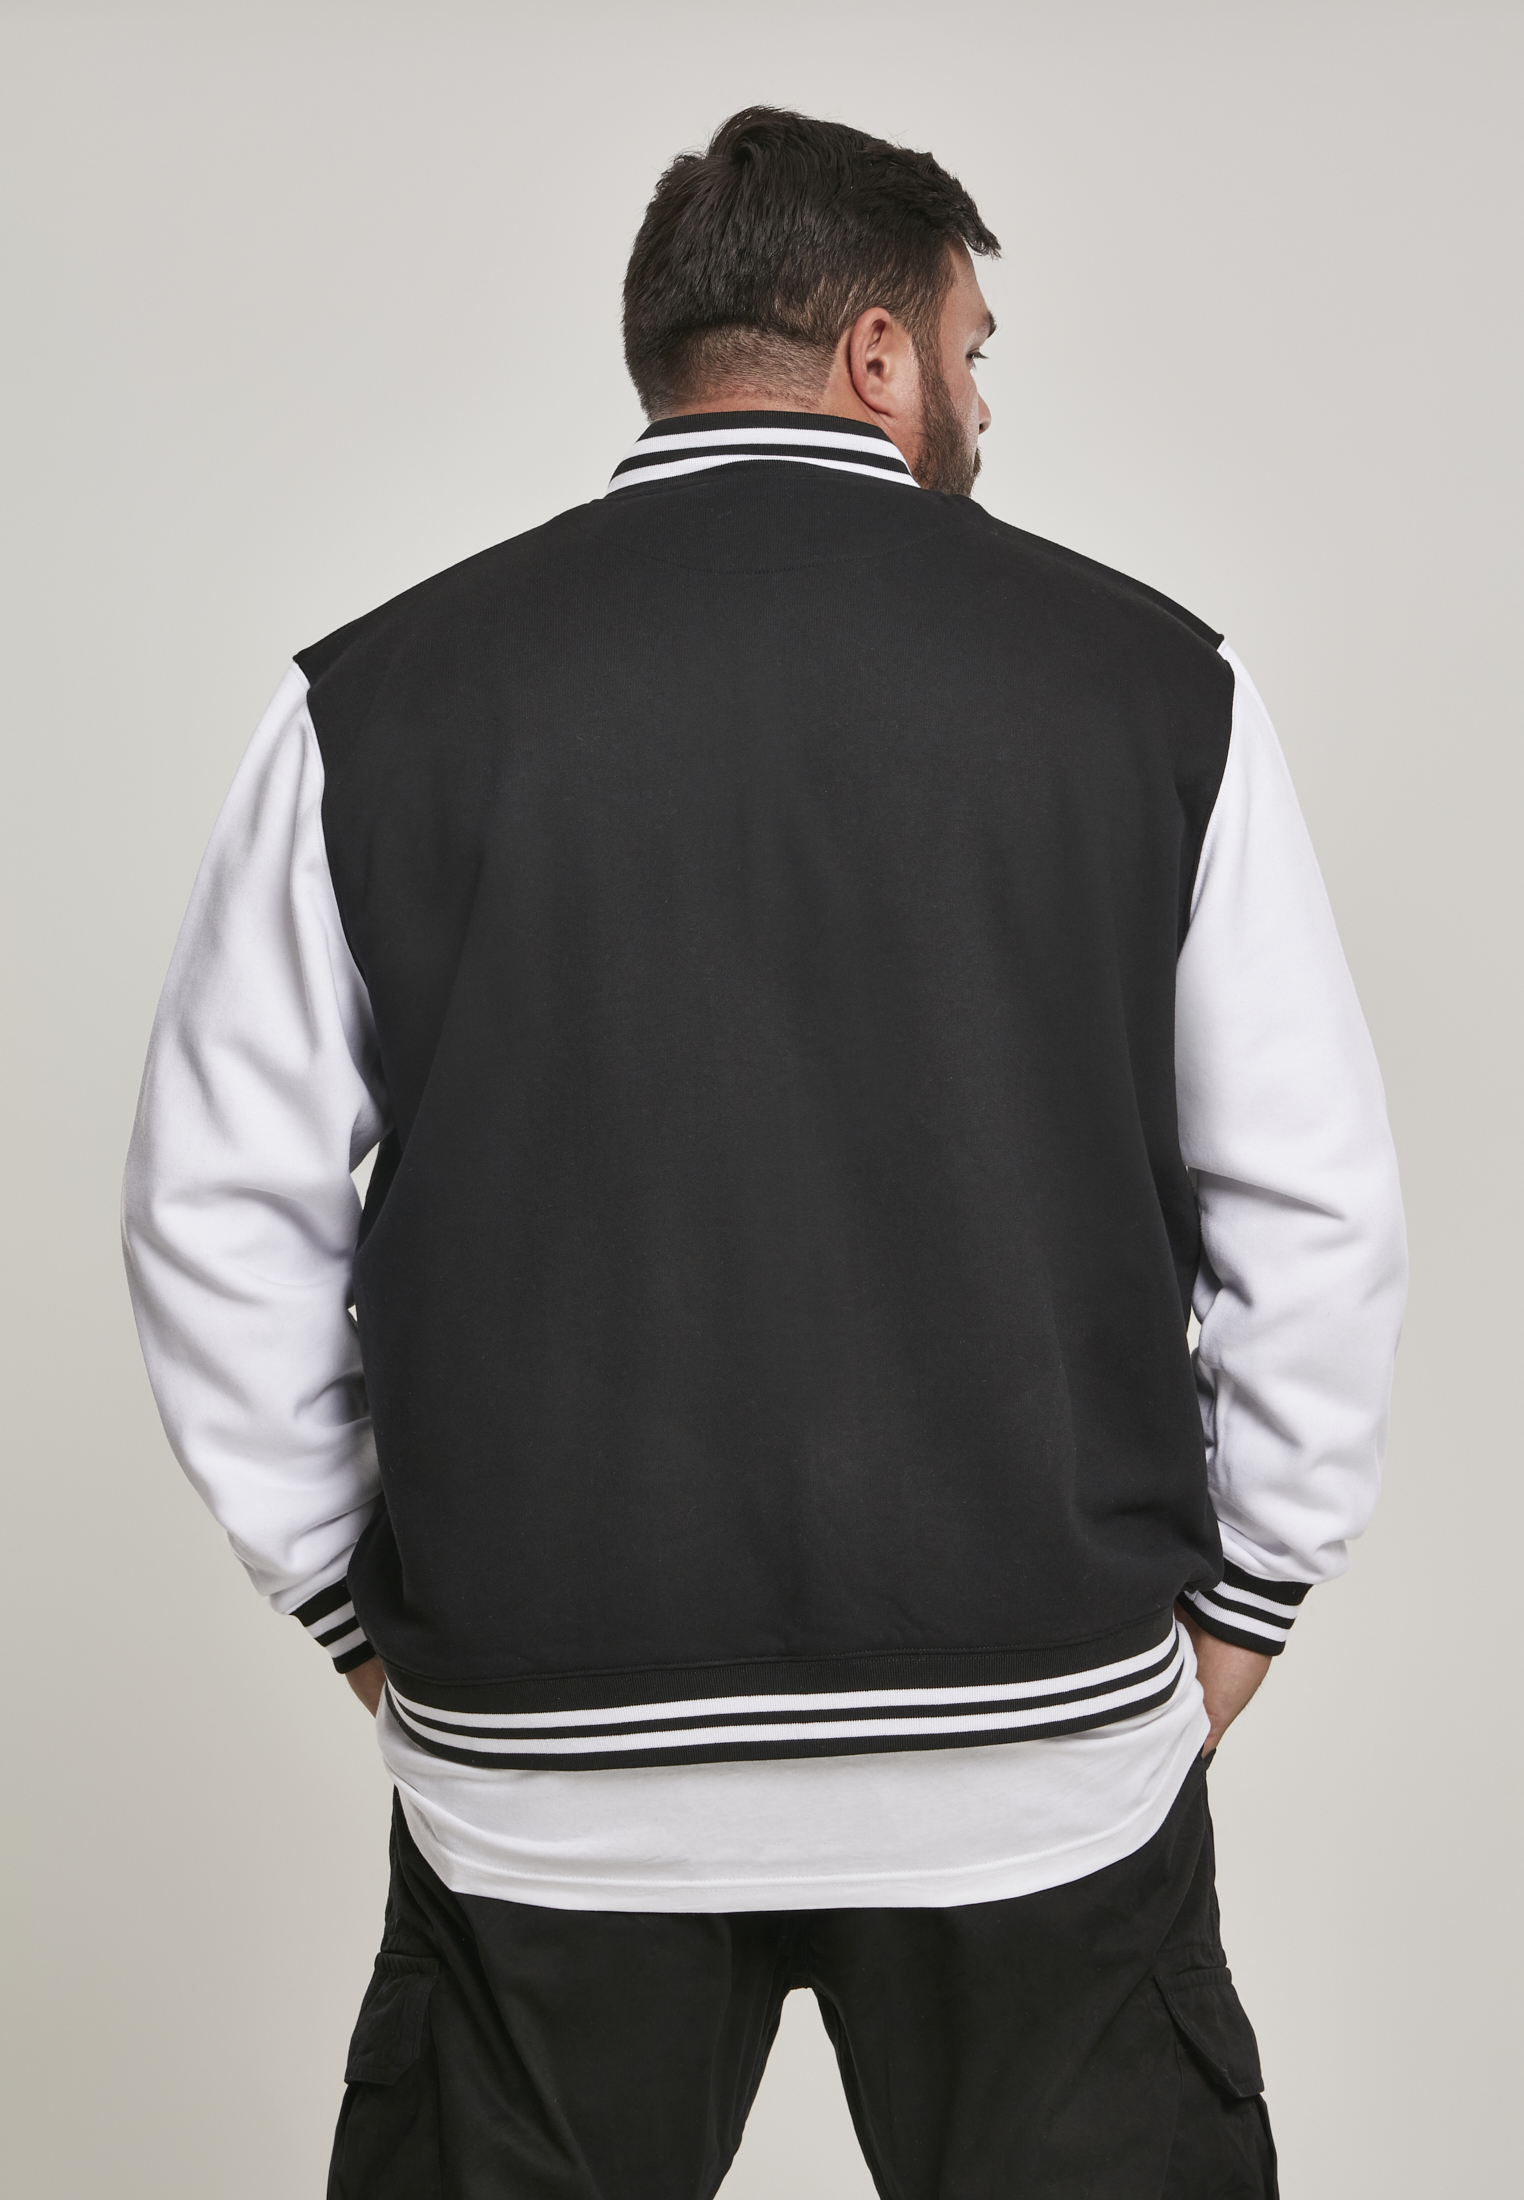 College Jacken 2-tone College Sweatjacket in Farbe blk/wht